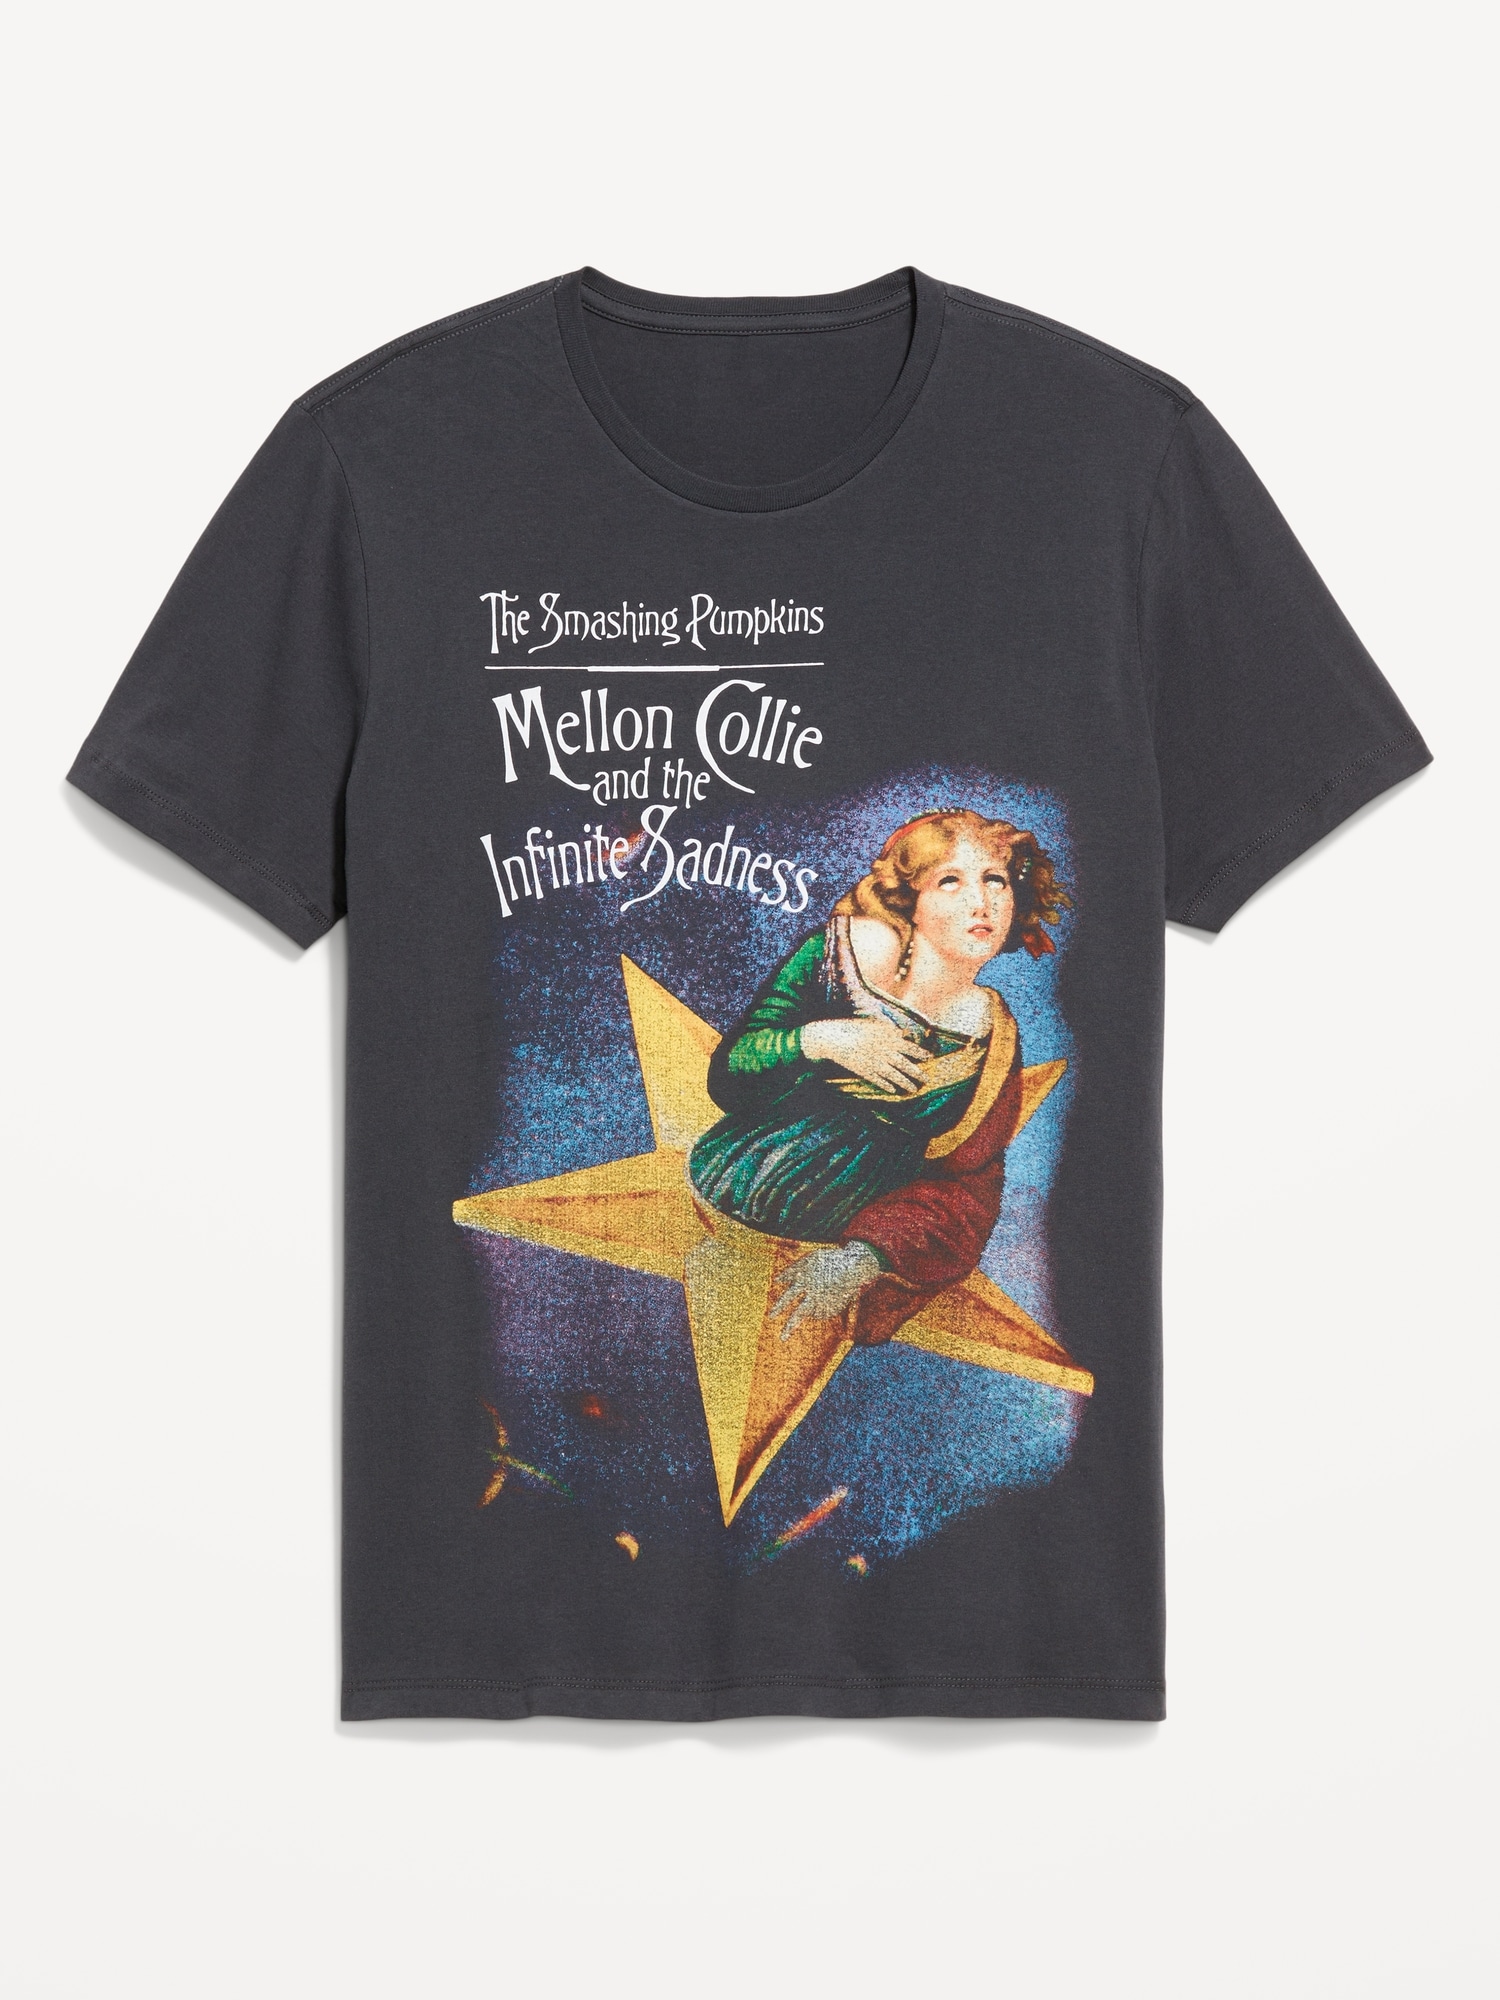 Smashing Pumpkins Gender-Neutral T-Shirt for Adults